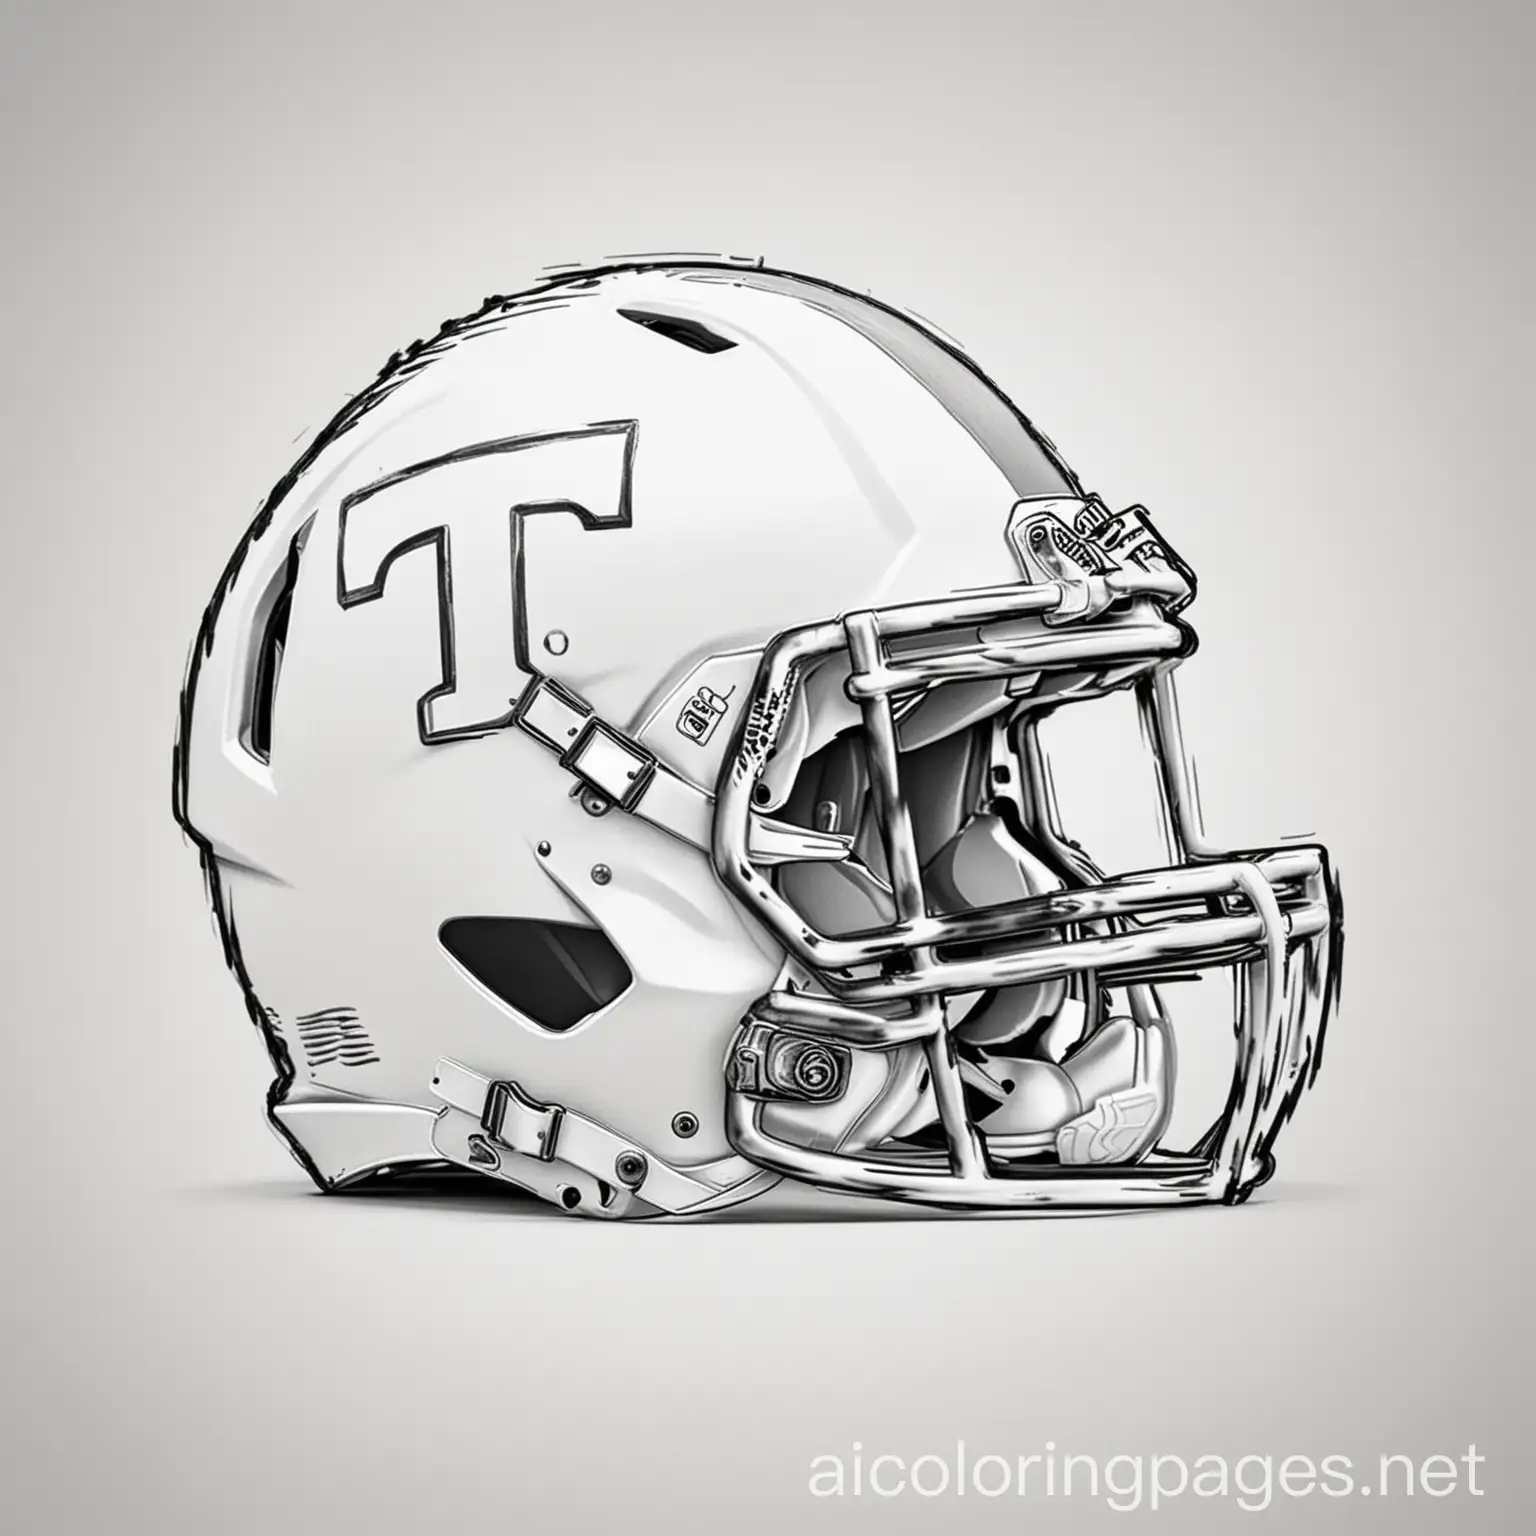 Tennessee-Vols-Football-Helmet-Coloring-Page